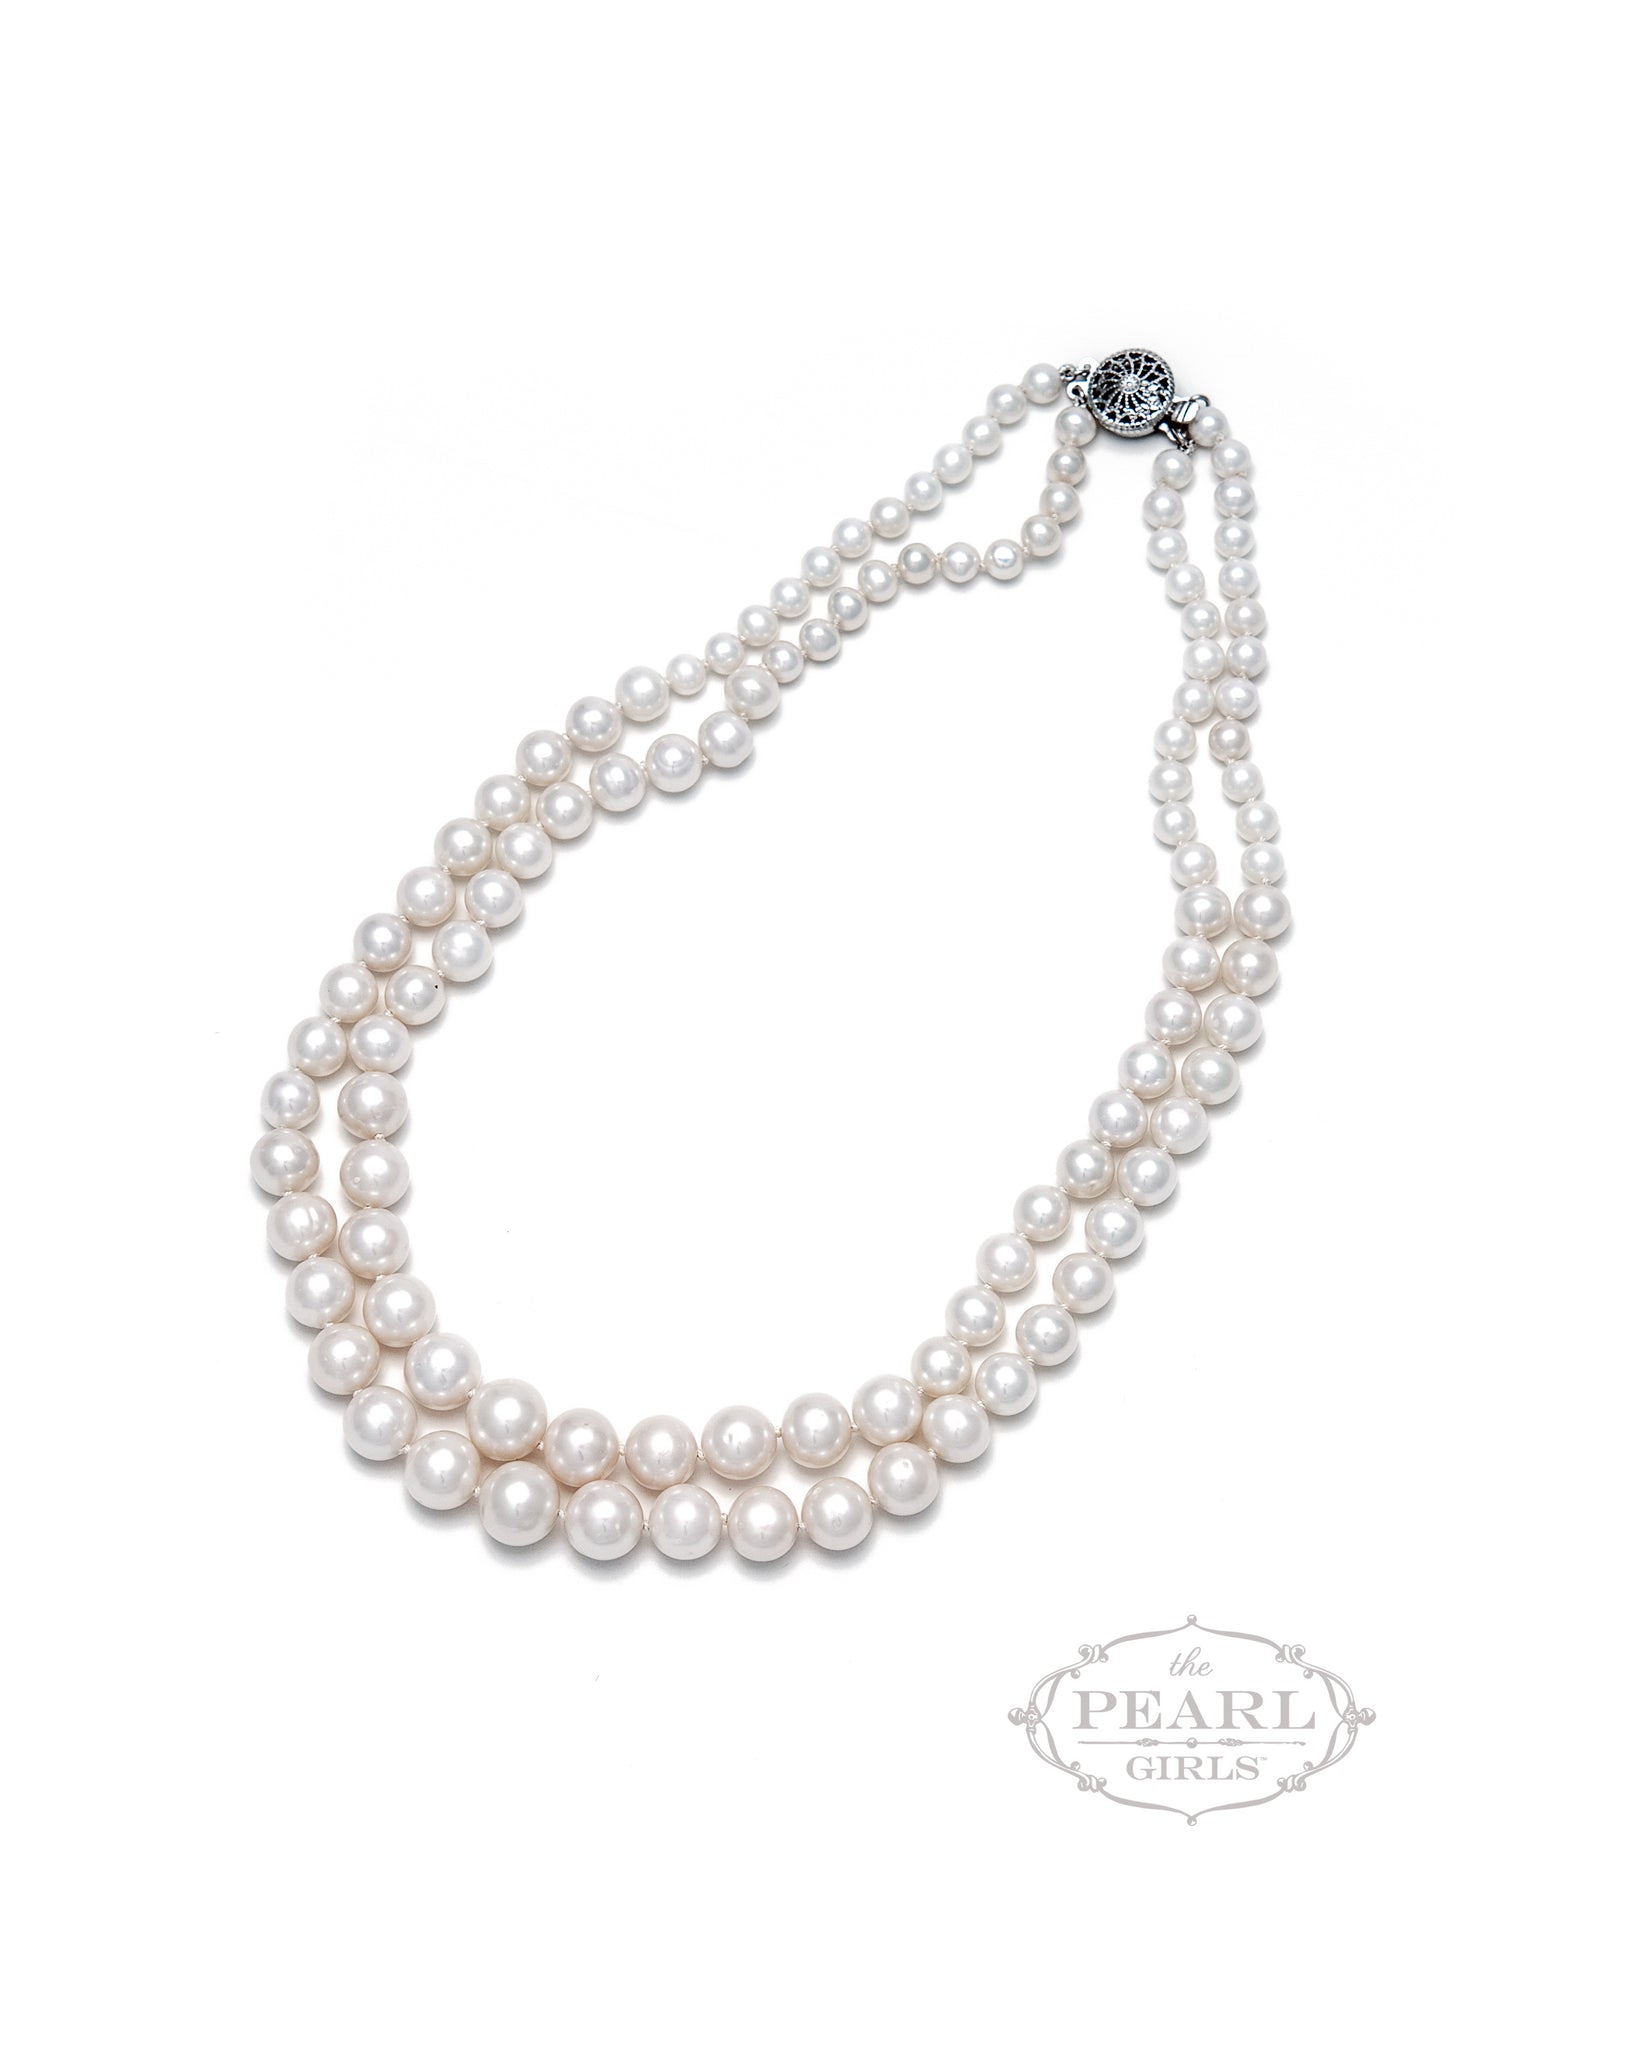 Graduated Pearl Necklace (Custom!)